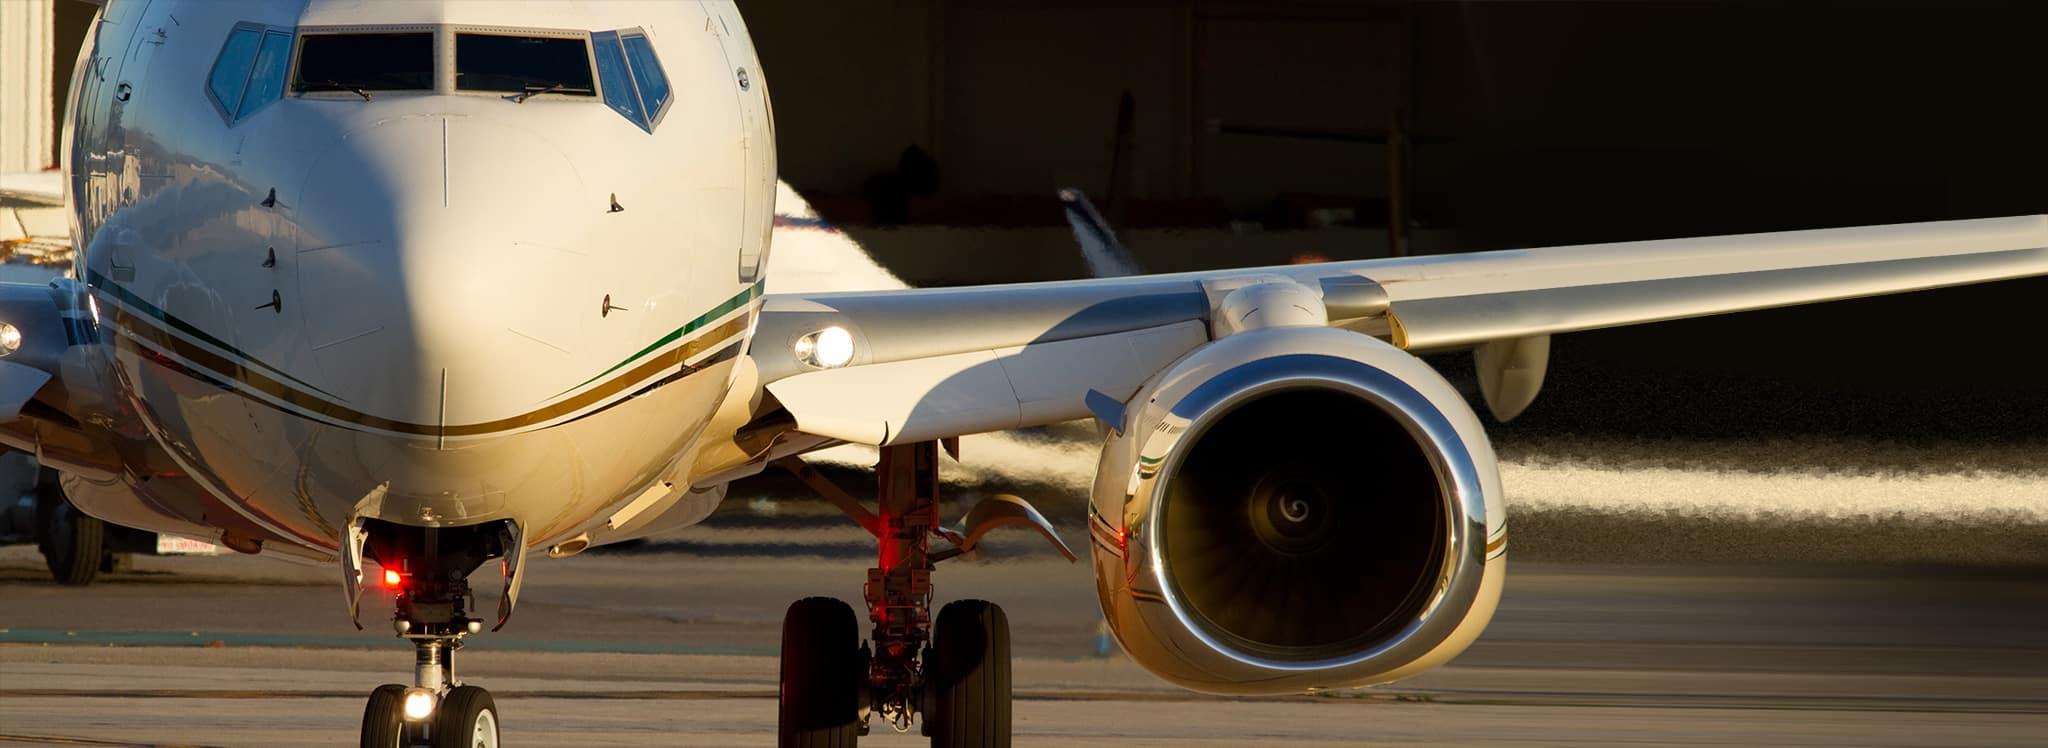 Howie, Sacks & Henry LLP – Personal Injury Law – Ethiopian Airline Crash